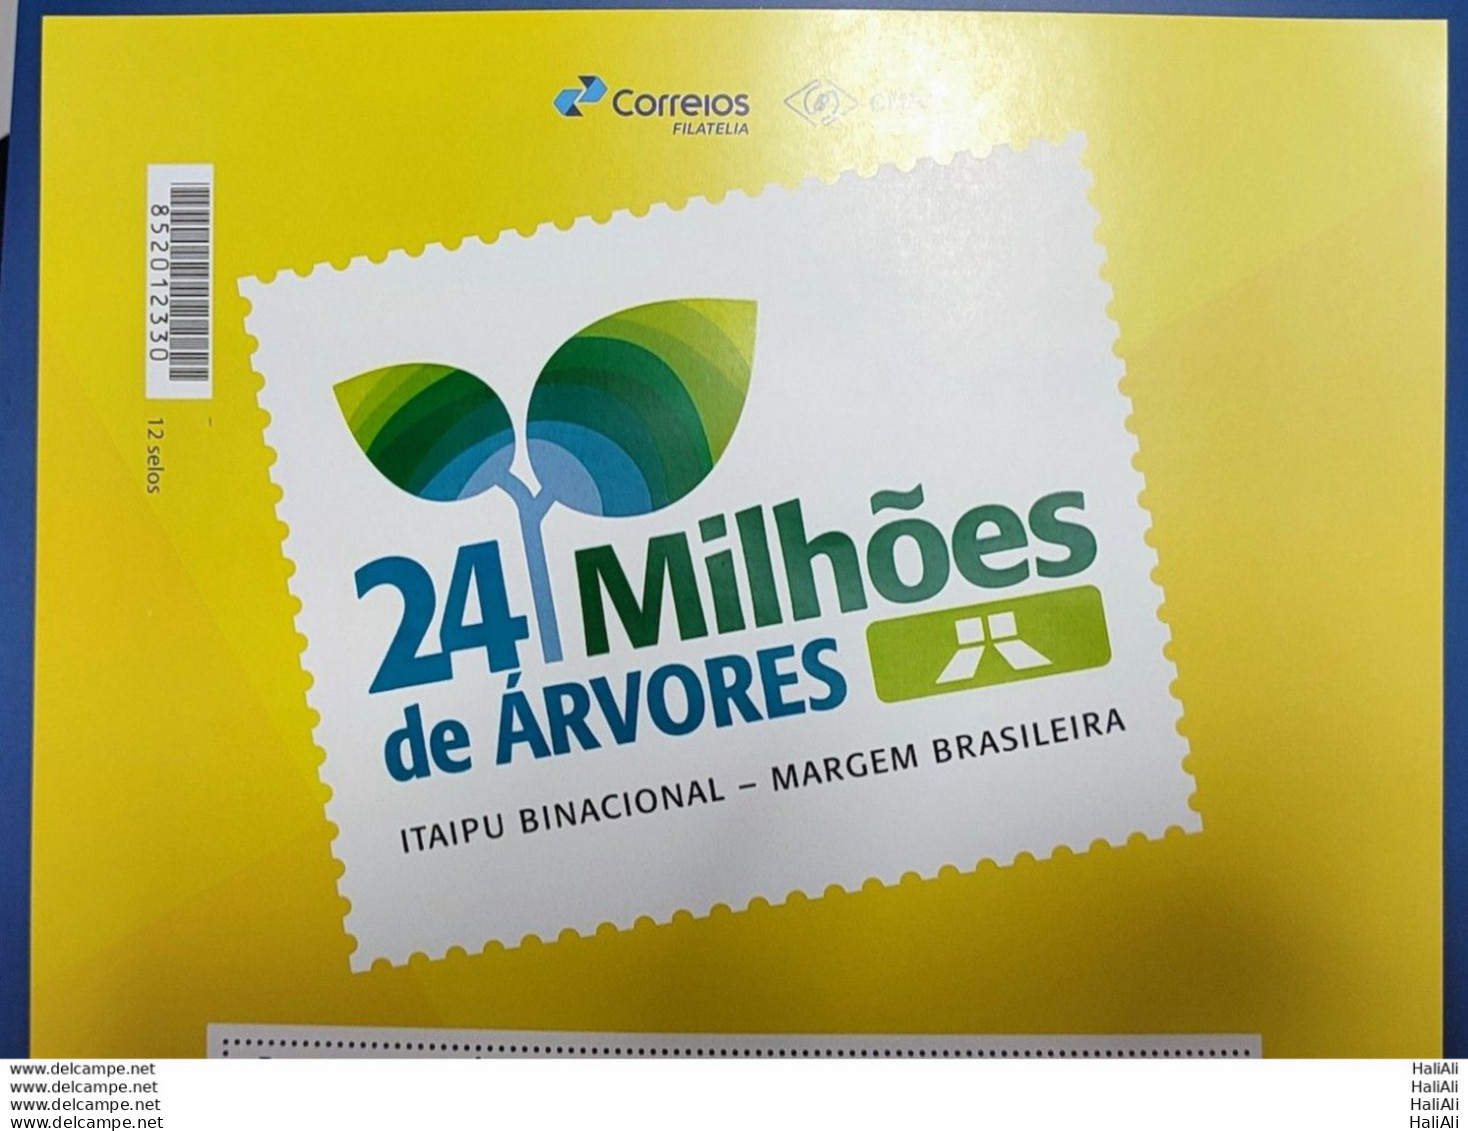 PB 198 Brazil Personalized Stamp Itaipu Binacional 24 Million Trees 2022 Vignette - Personalized Stamps